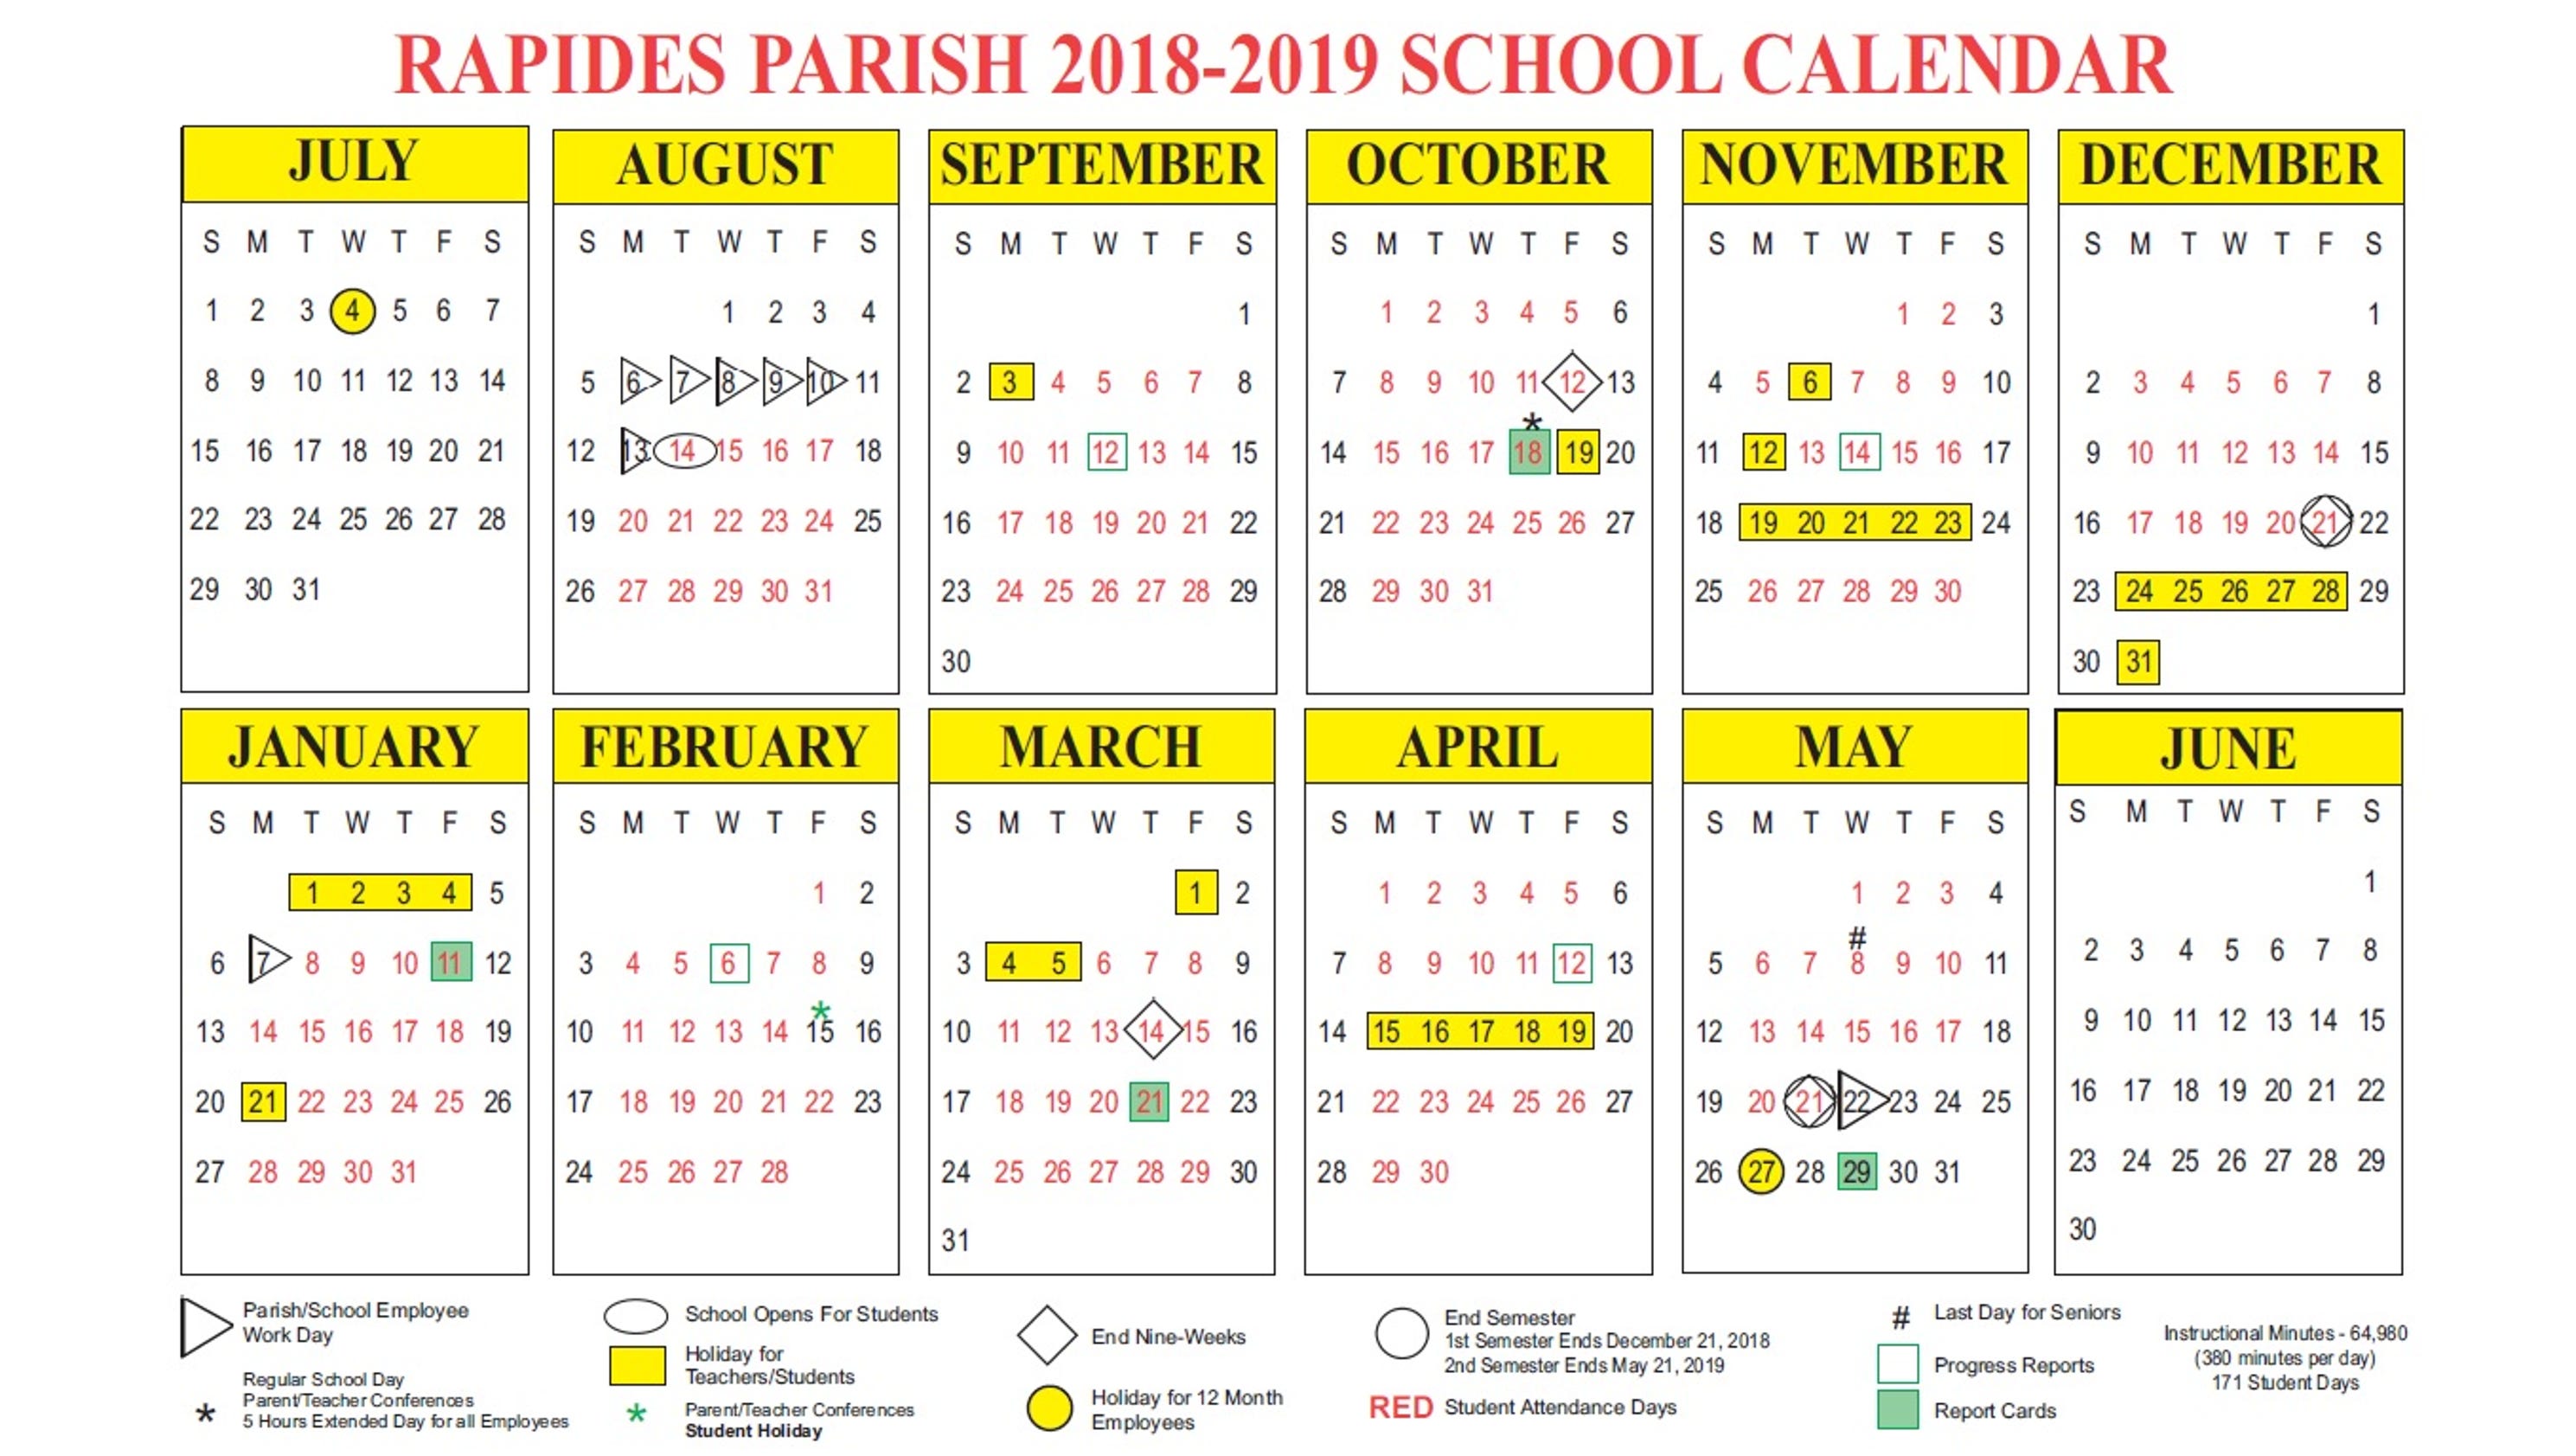 2018-19 school calendar finalized after feedback from community